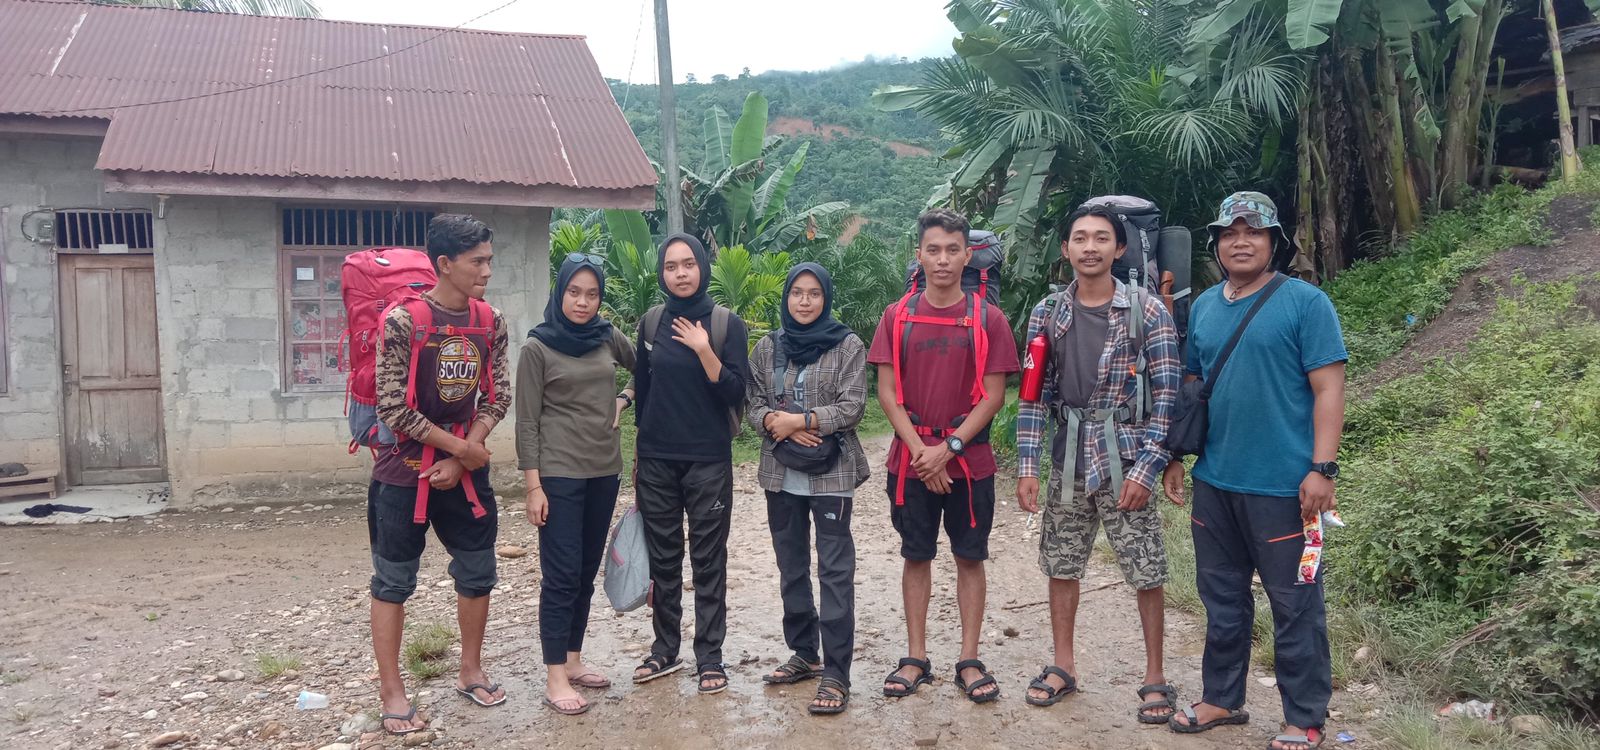 Bustami dan rekan-rekannya bersiap mendaki Bukit Awan di Kecamatan Bandar Pusaka, Kabupaten Aceh Tamiang, Aceh. (Doc. ALIBI.id)